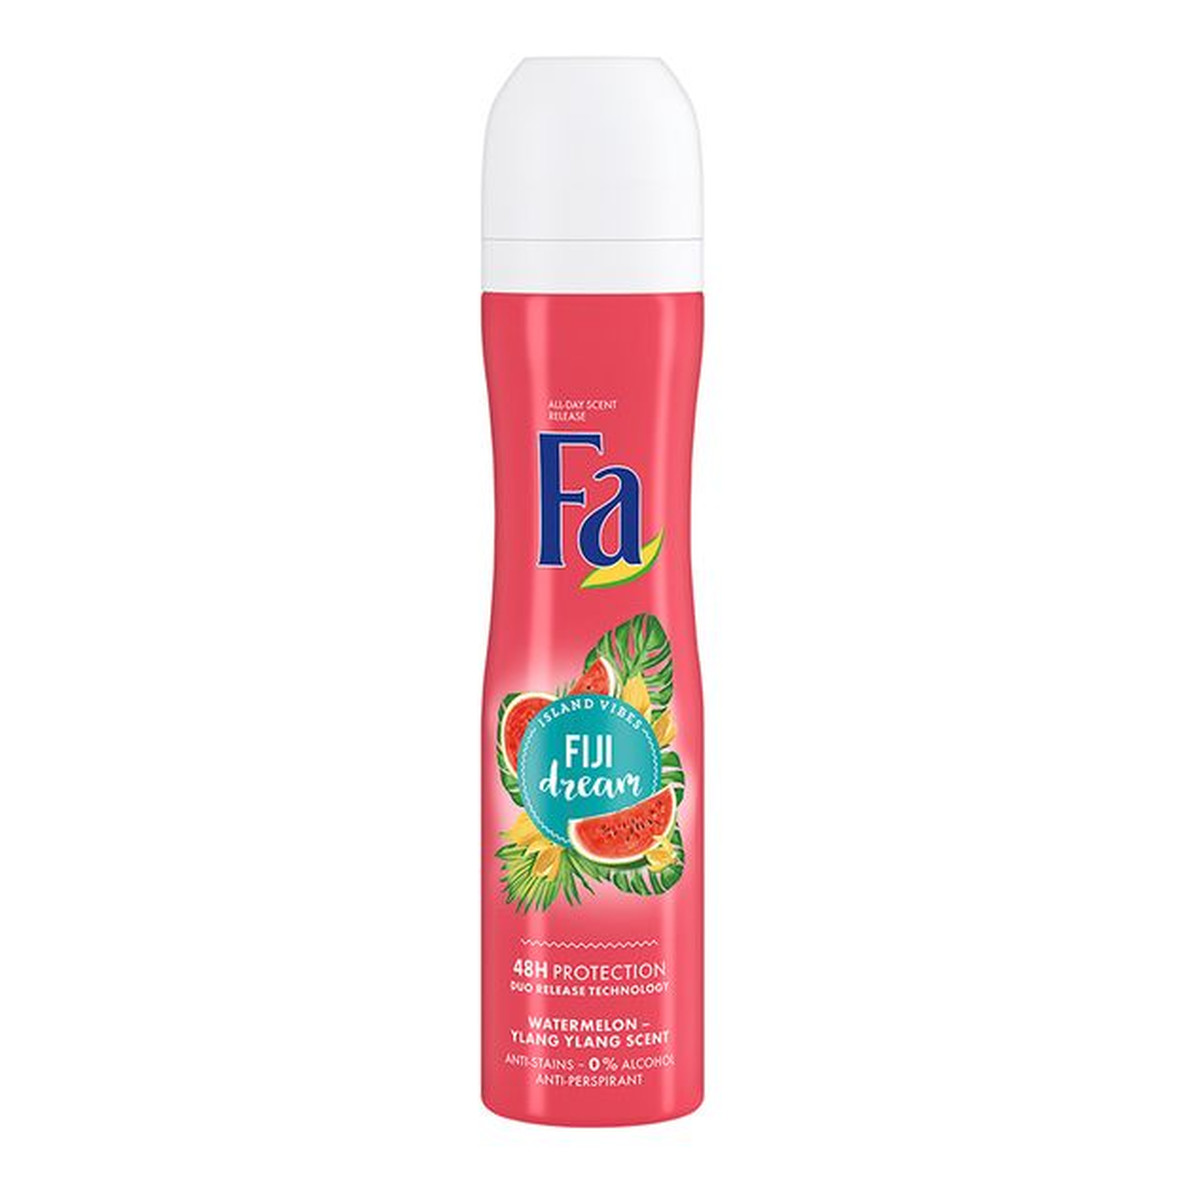 Fa Island vibes fiji dream antiperspirant antyperspirant w sprayu watermelon ylang ylang scent 250ml